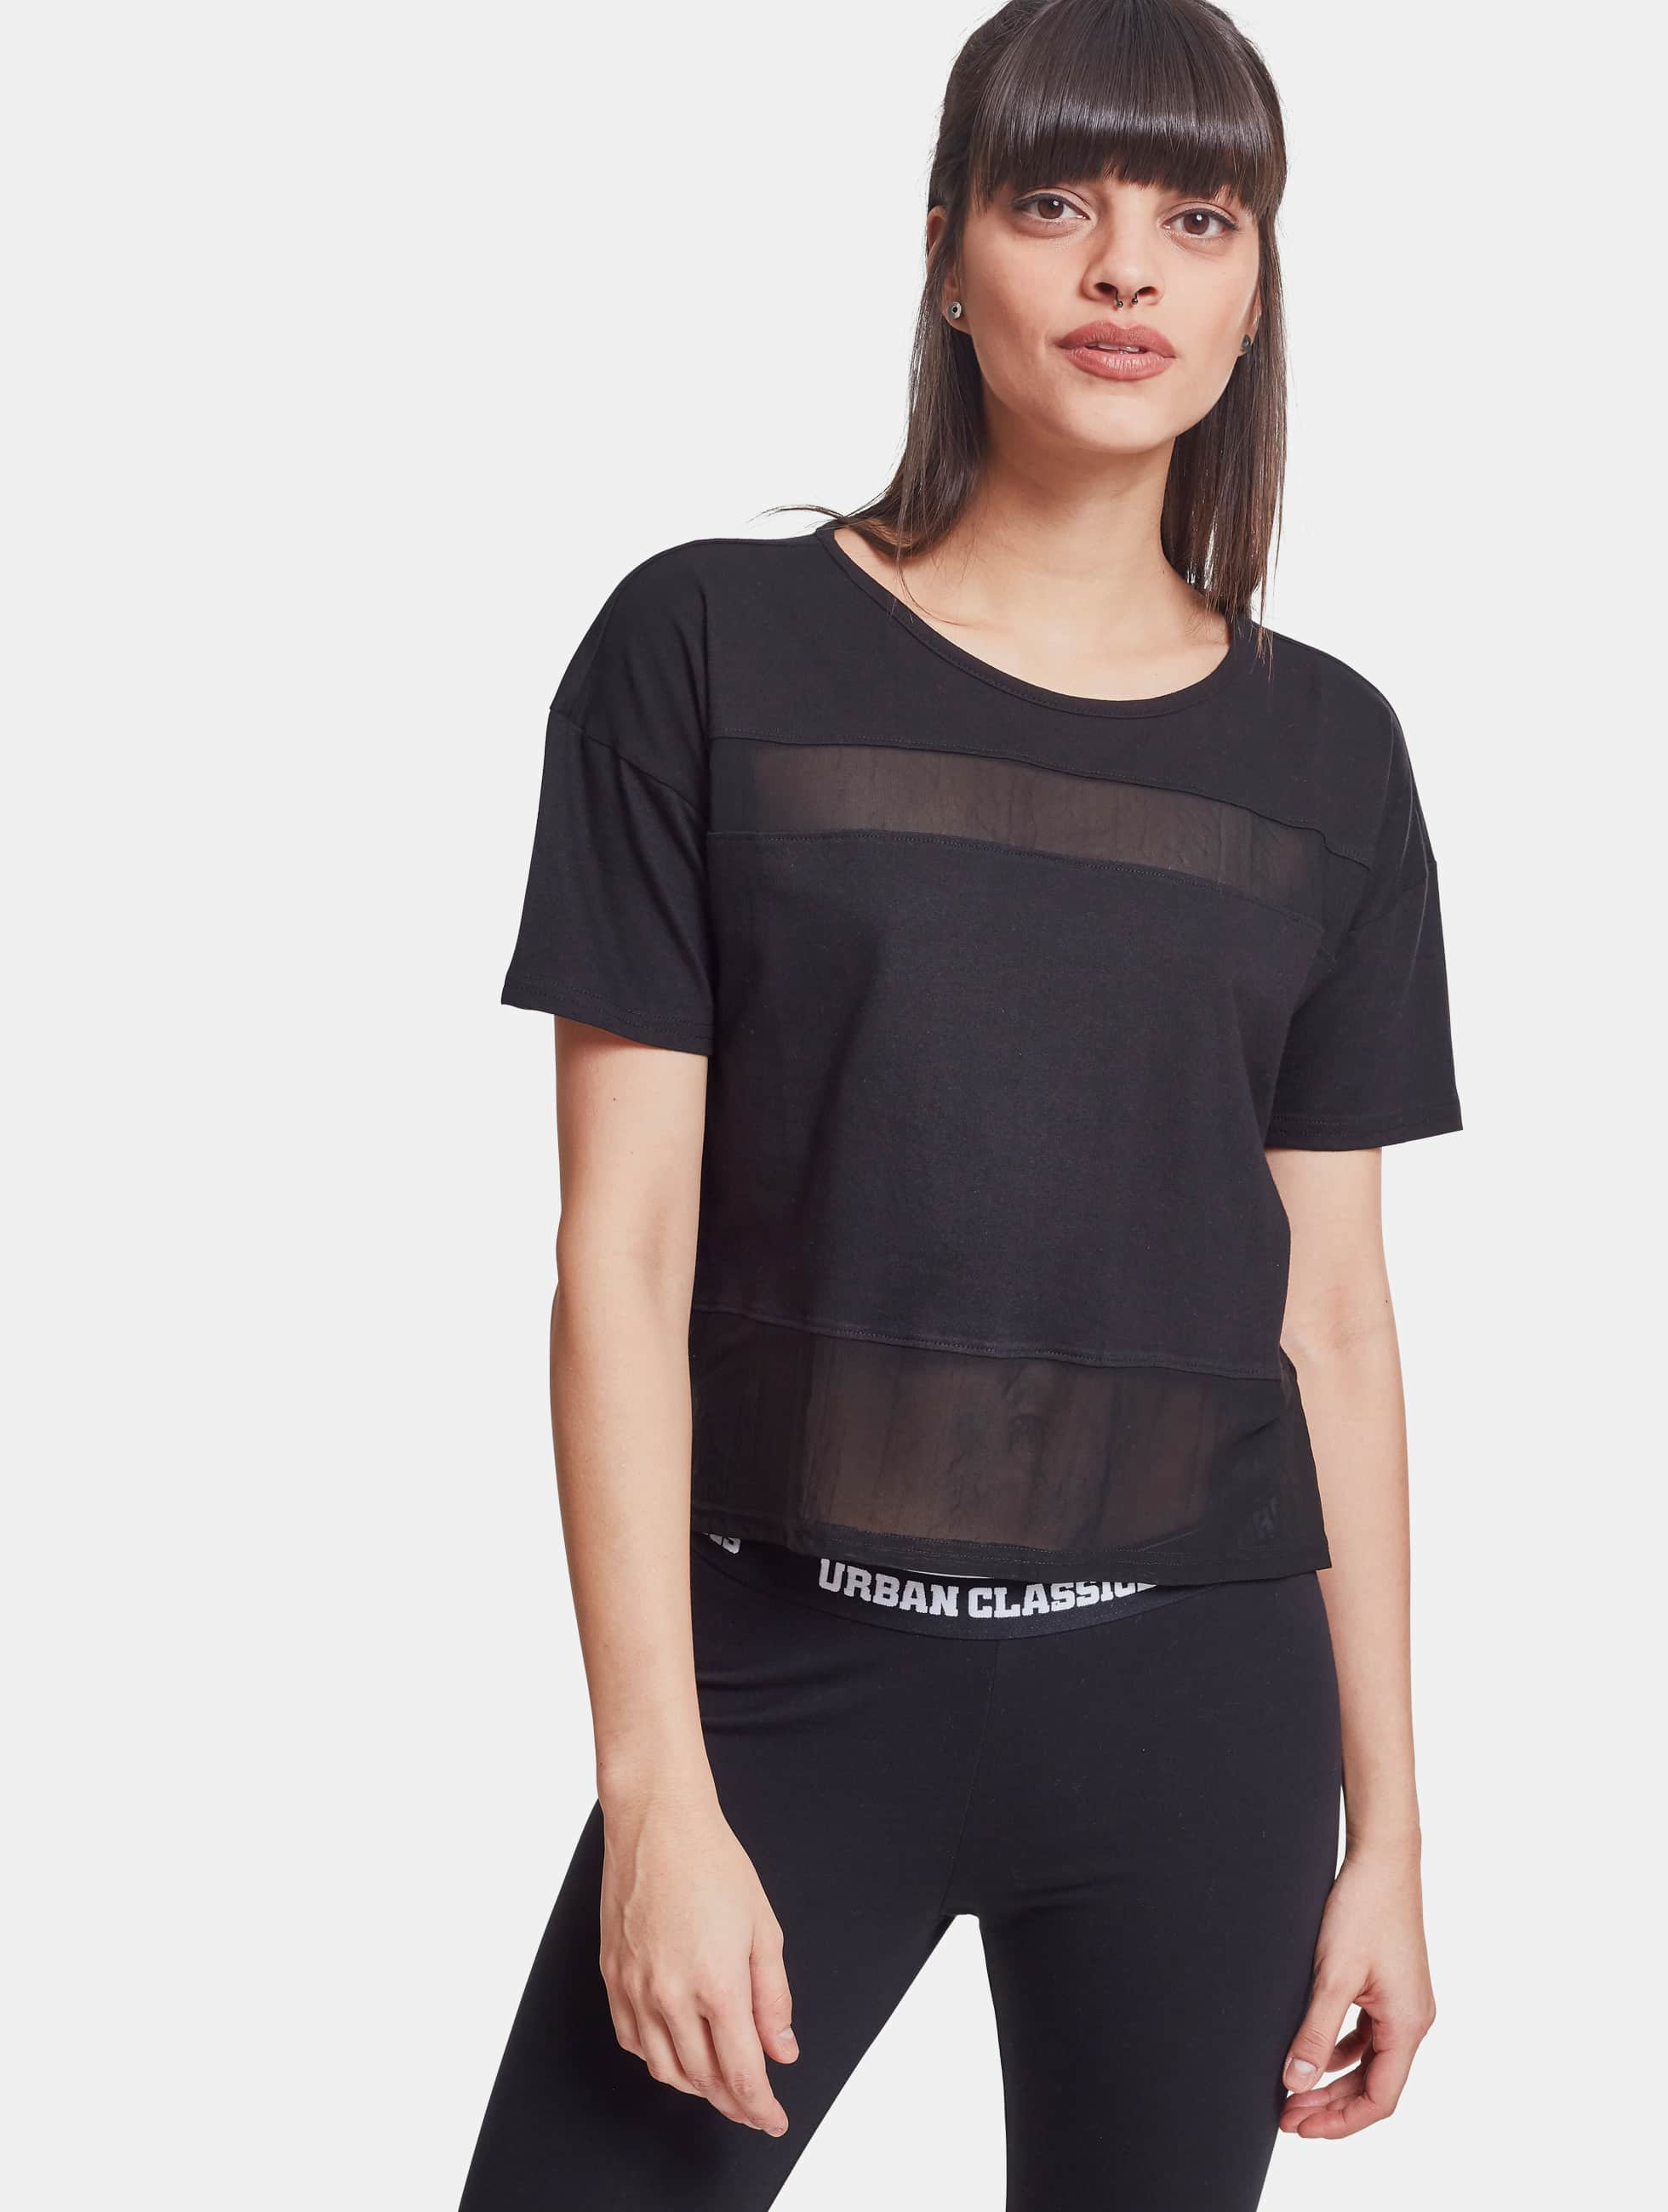 Urban Classics bovenstuk / t-shirt Tech Mesh in zwart